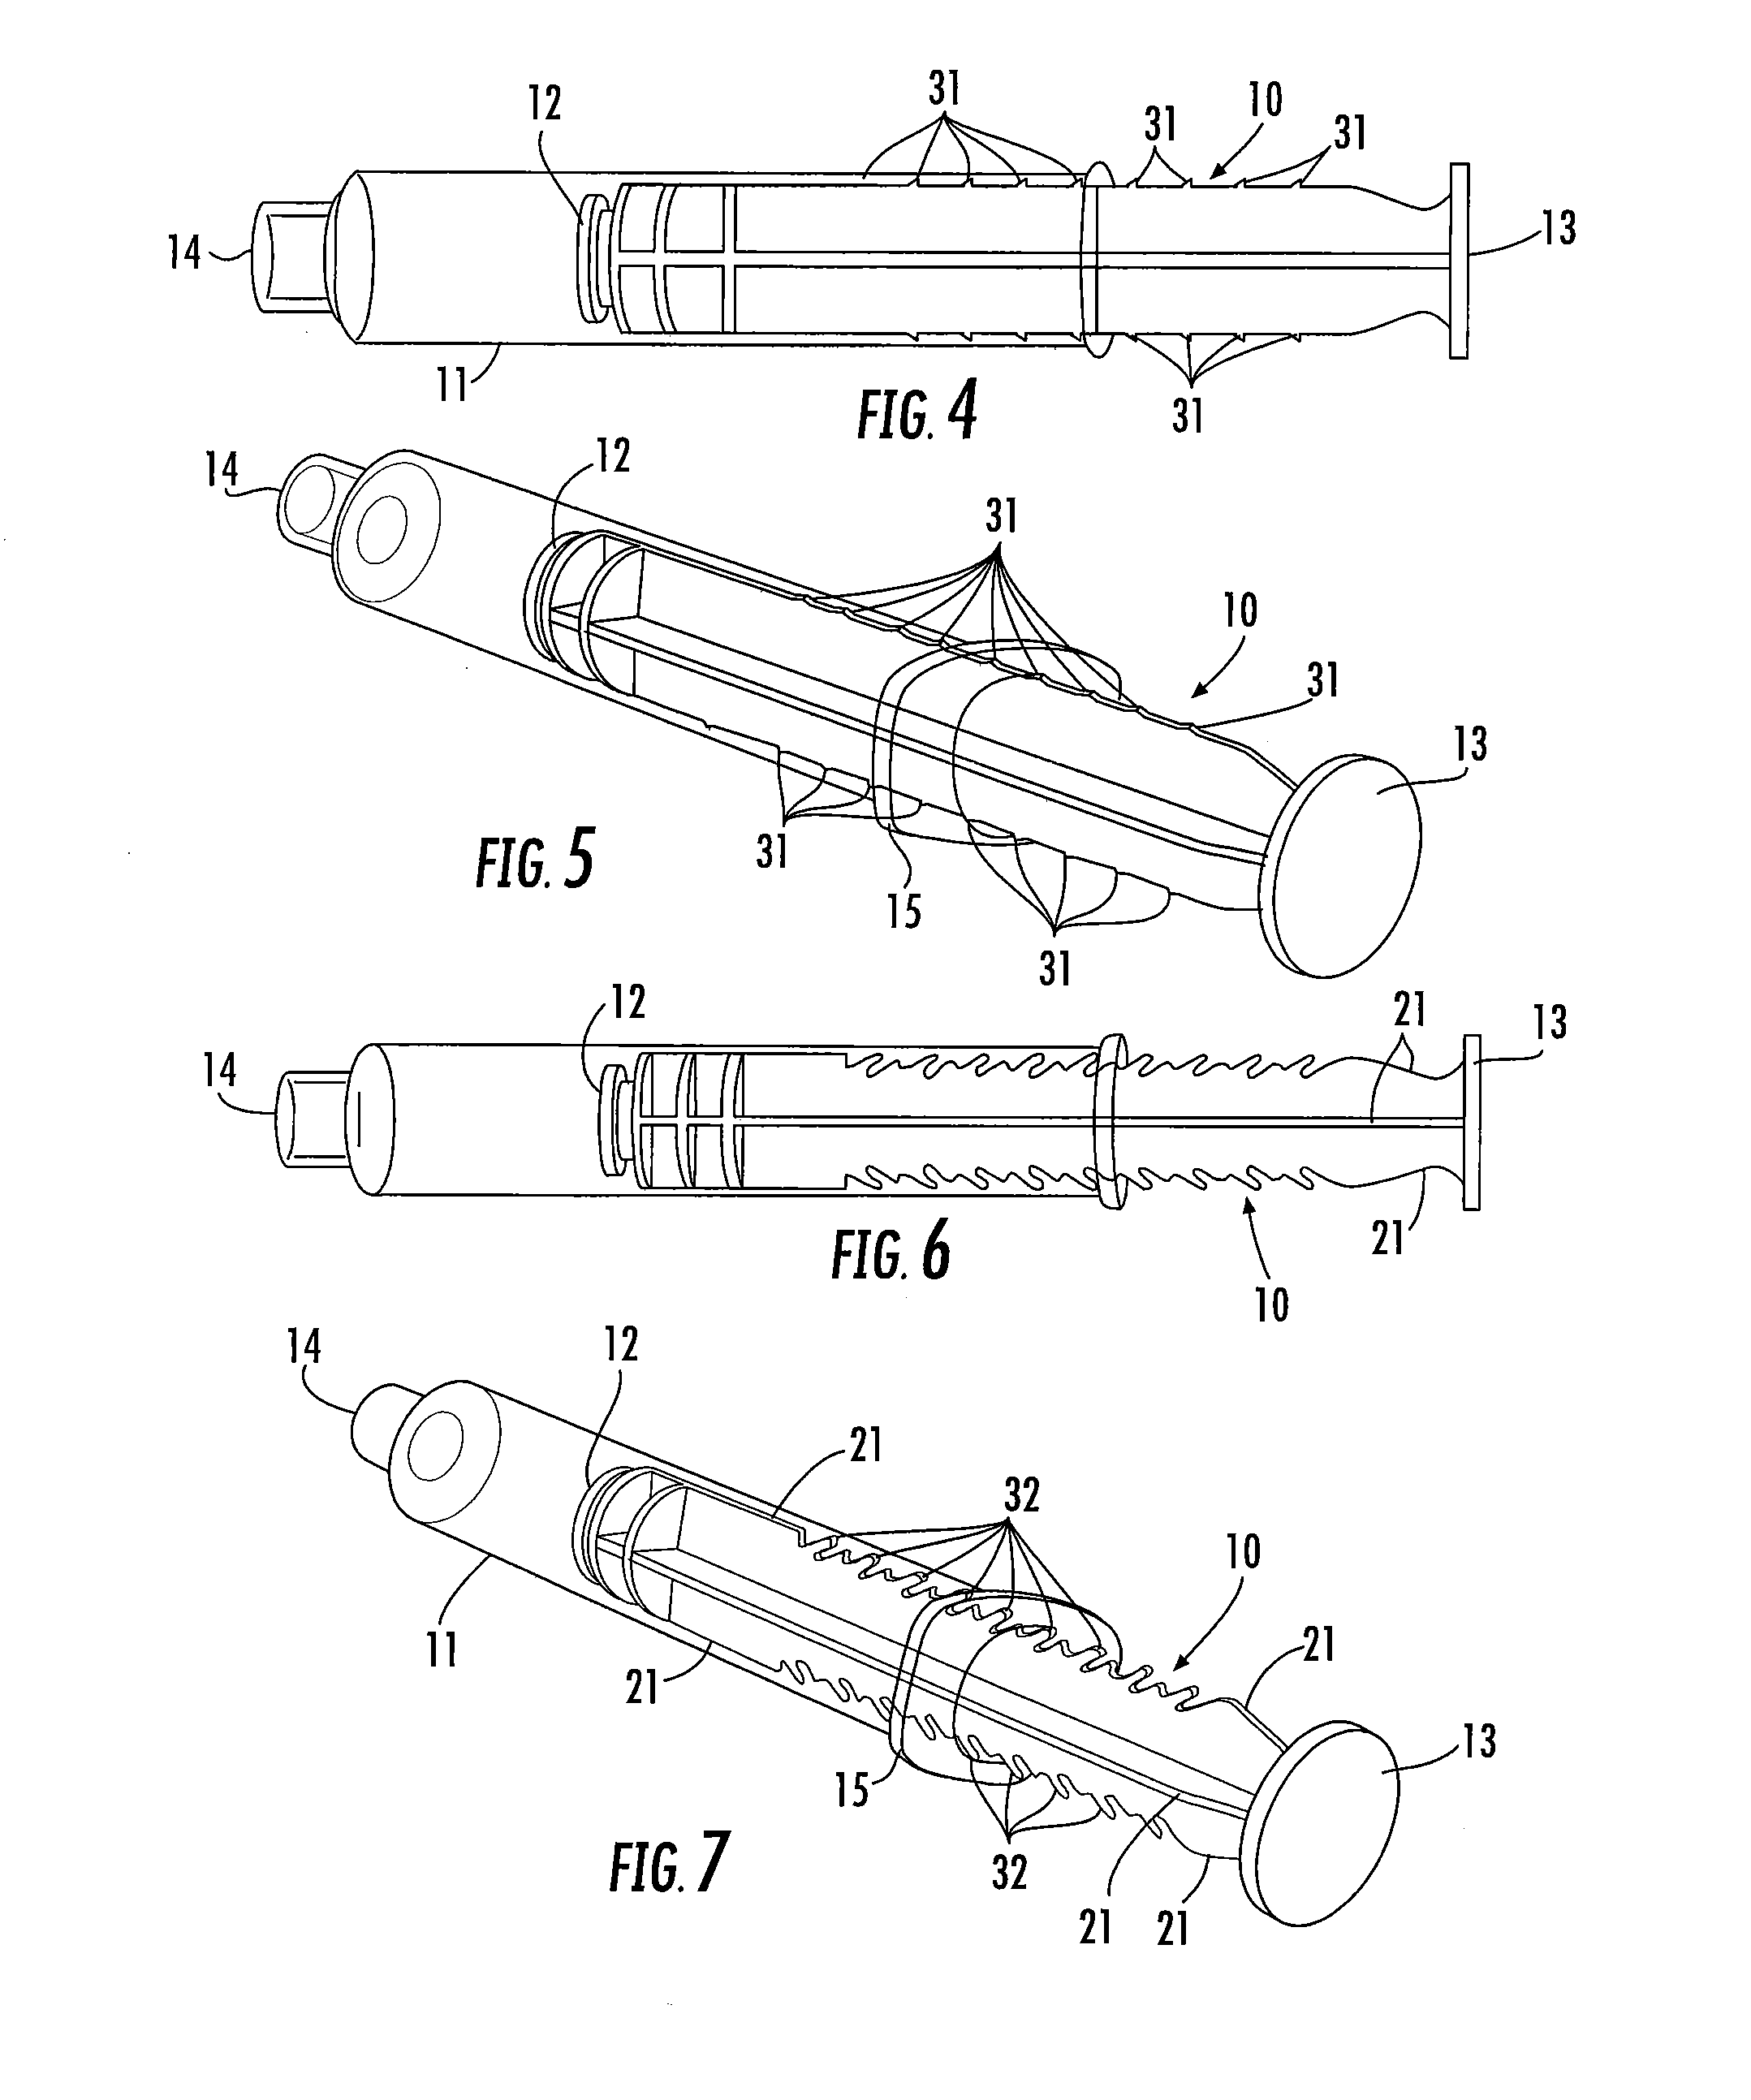 Incremental syringe